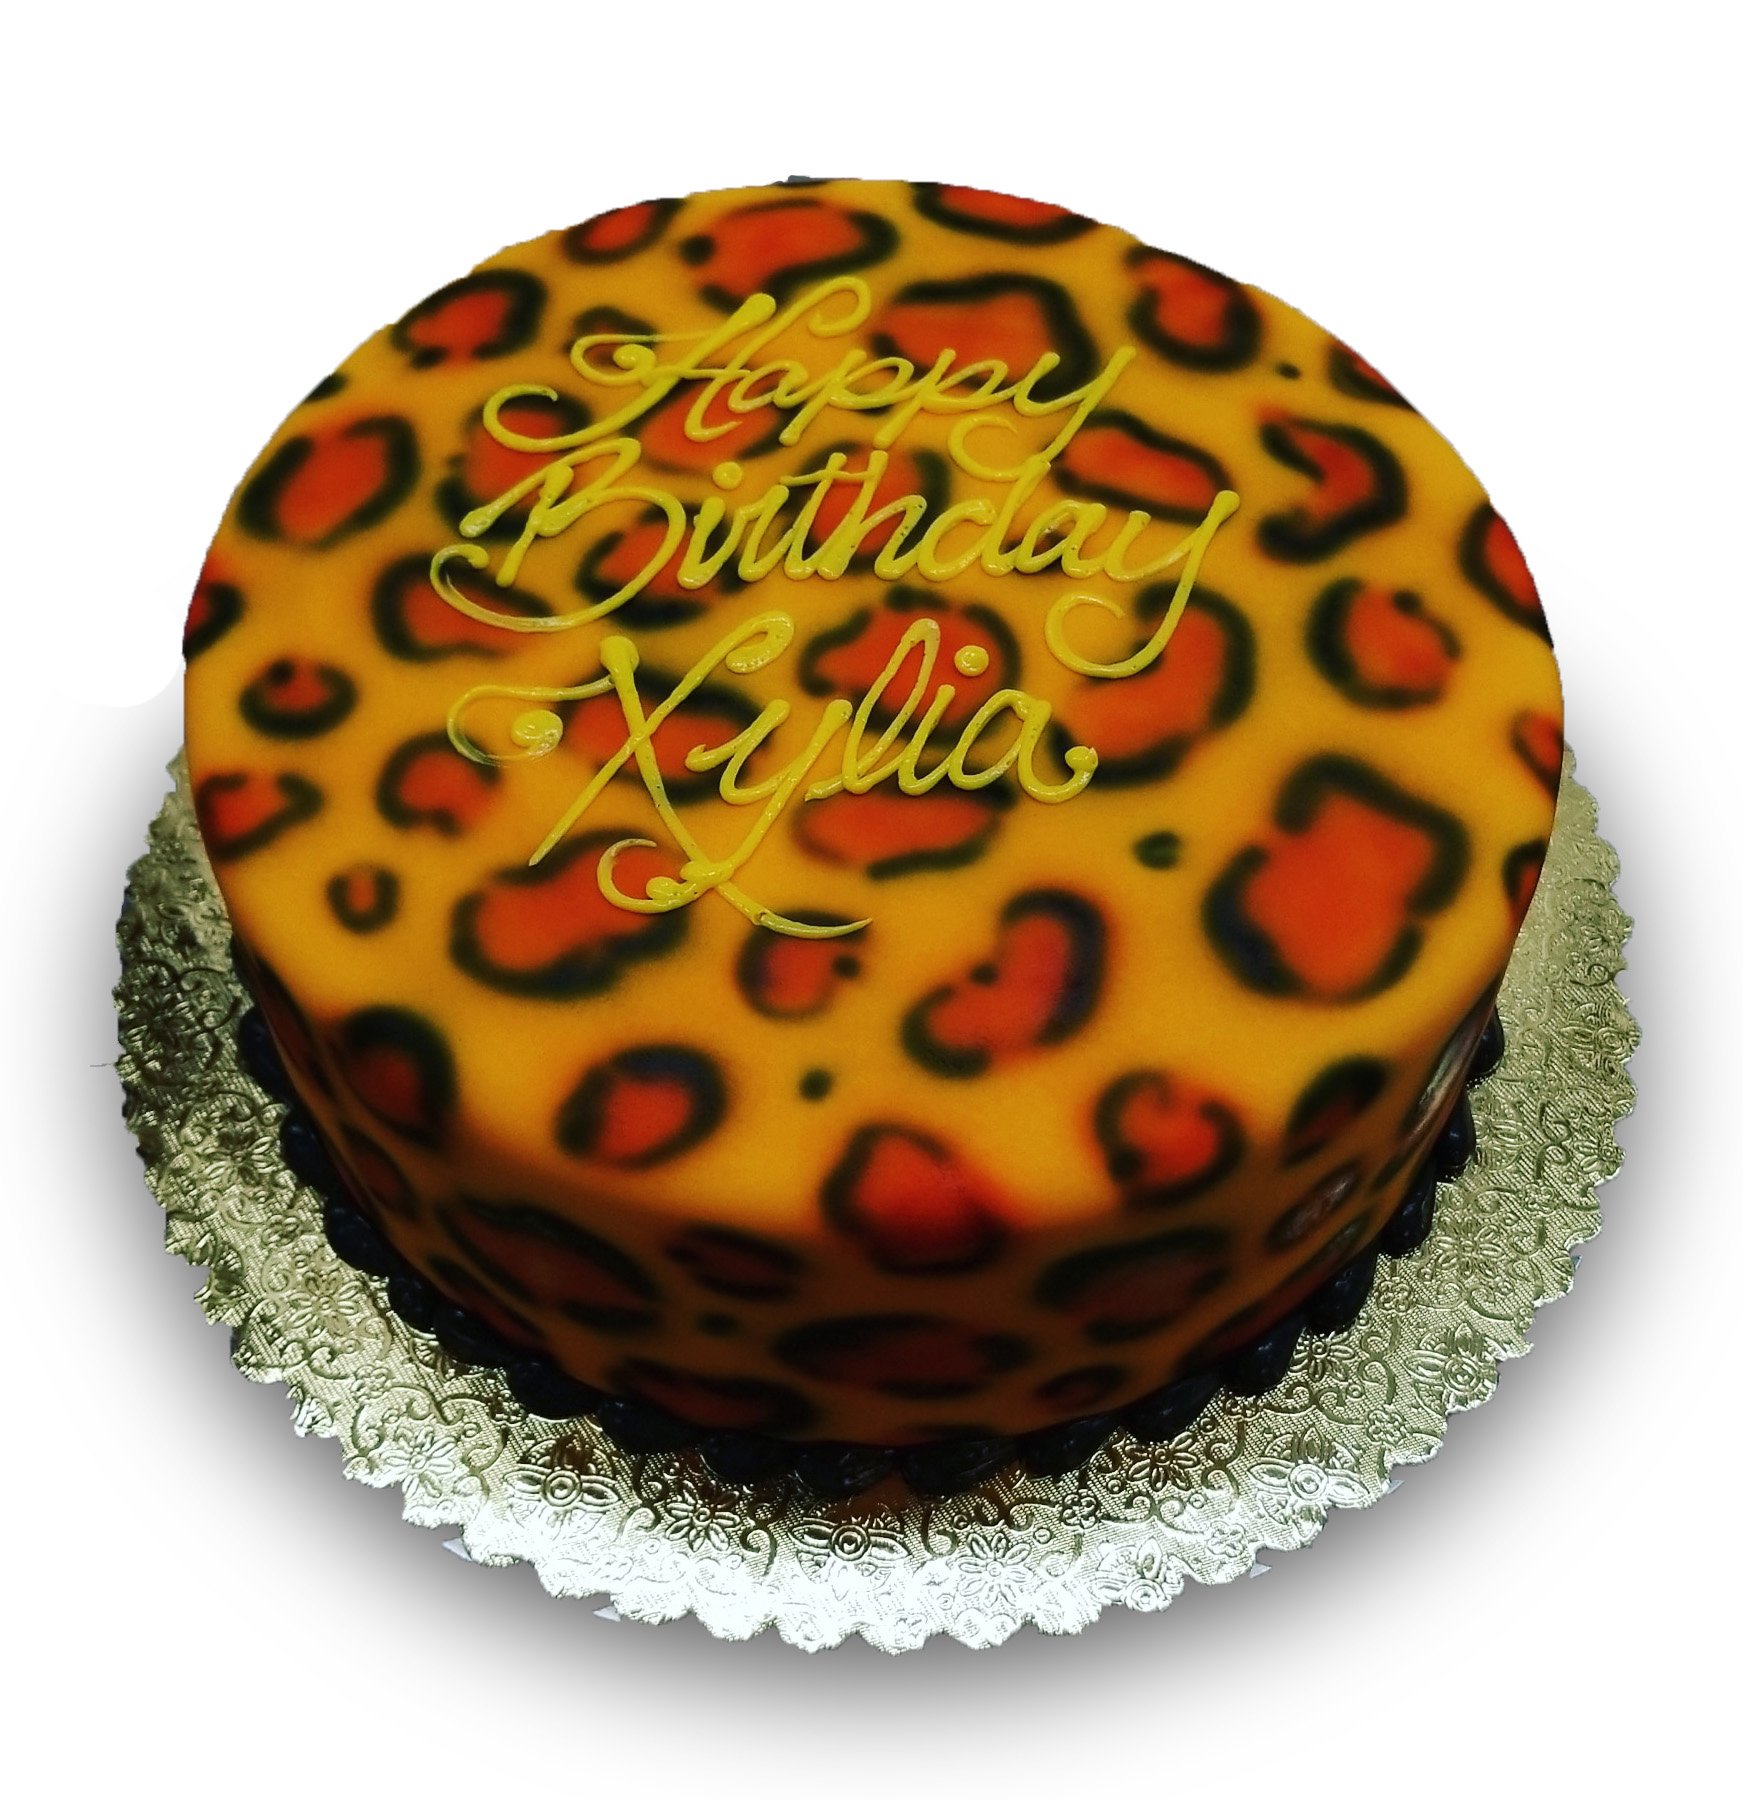 AB036. Fondant covered leopard print birthday cake